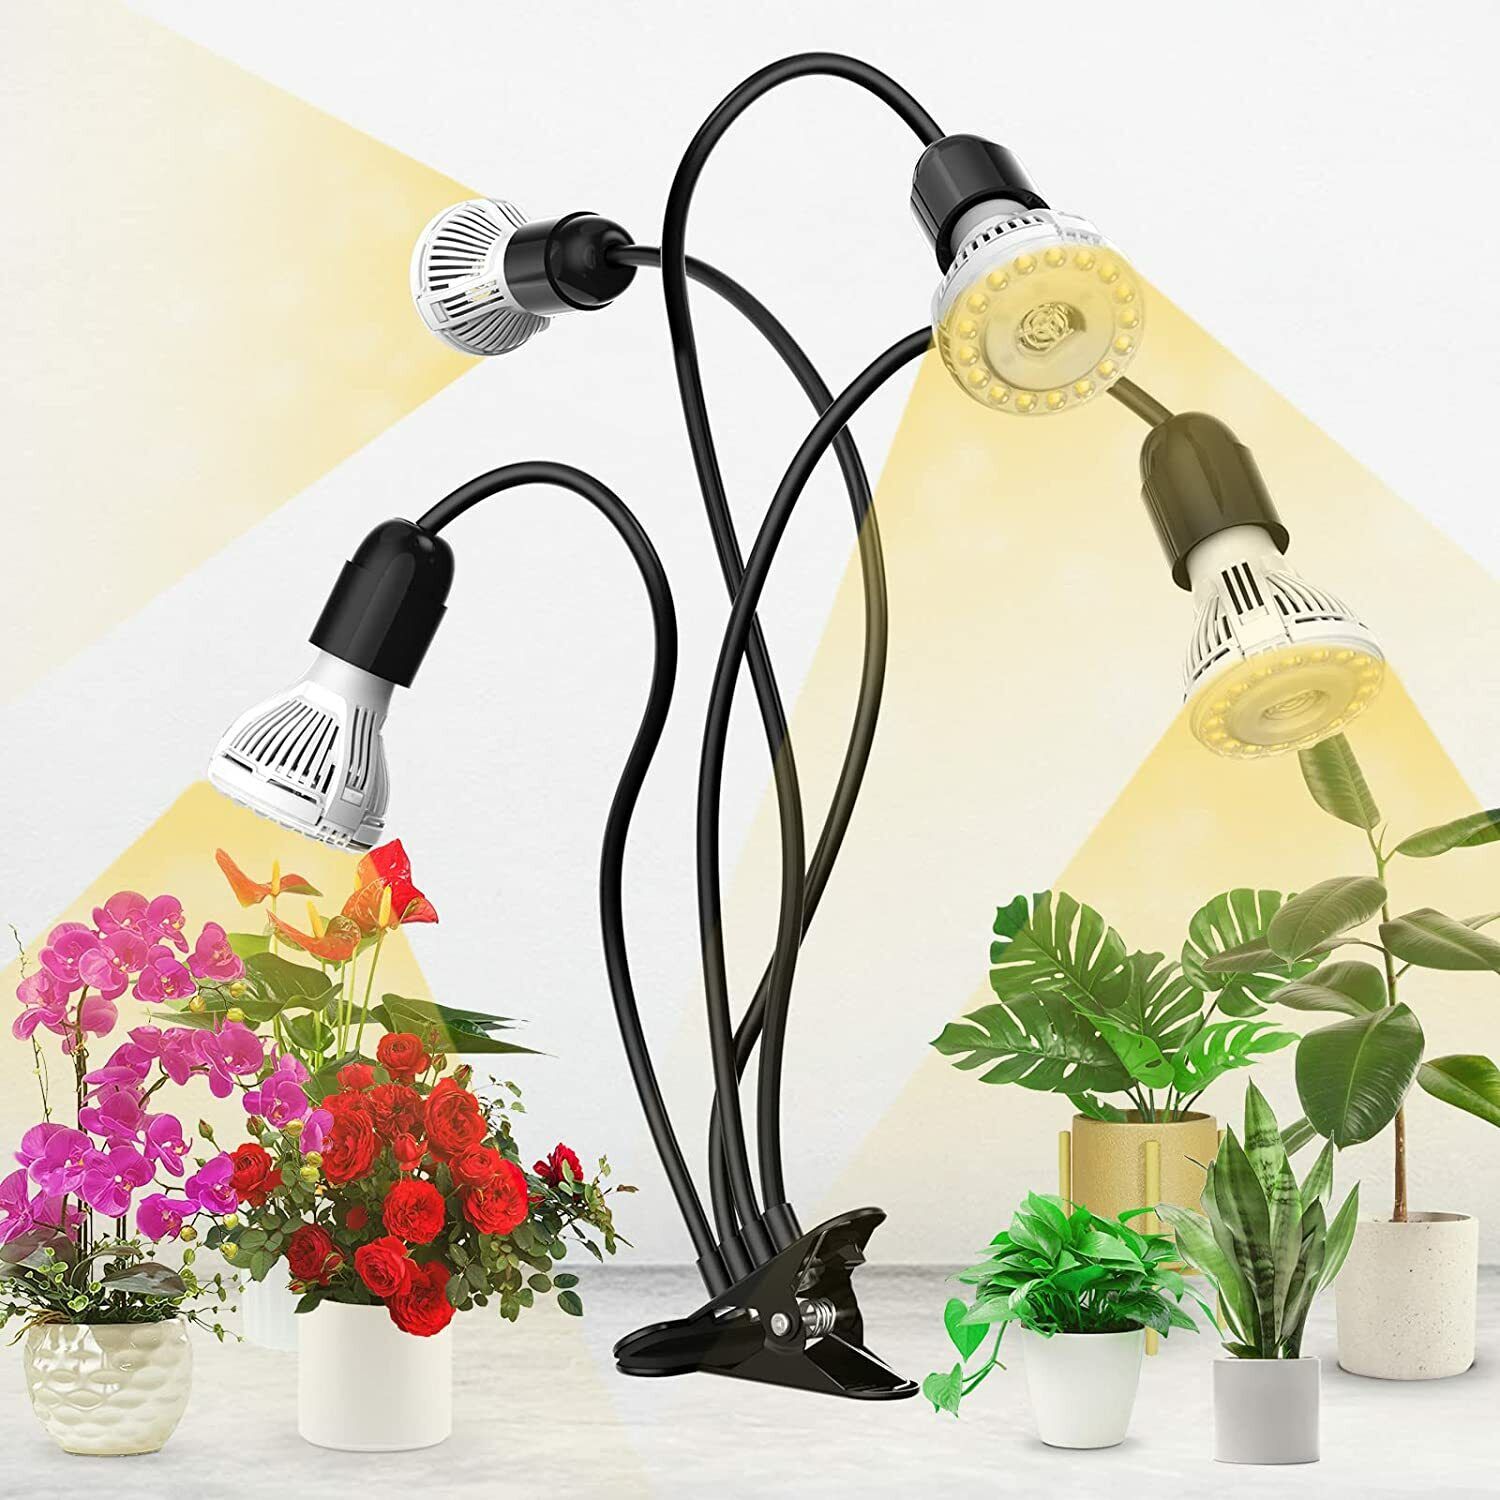 10W/20W/30W/40W LED Grow Light Full Specturm Gooseneck Clamp Grow Lamp E26 COC